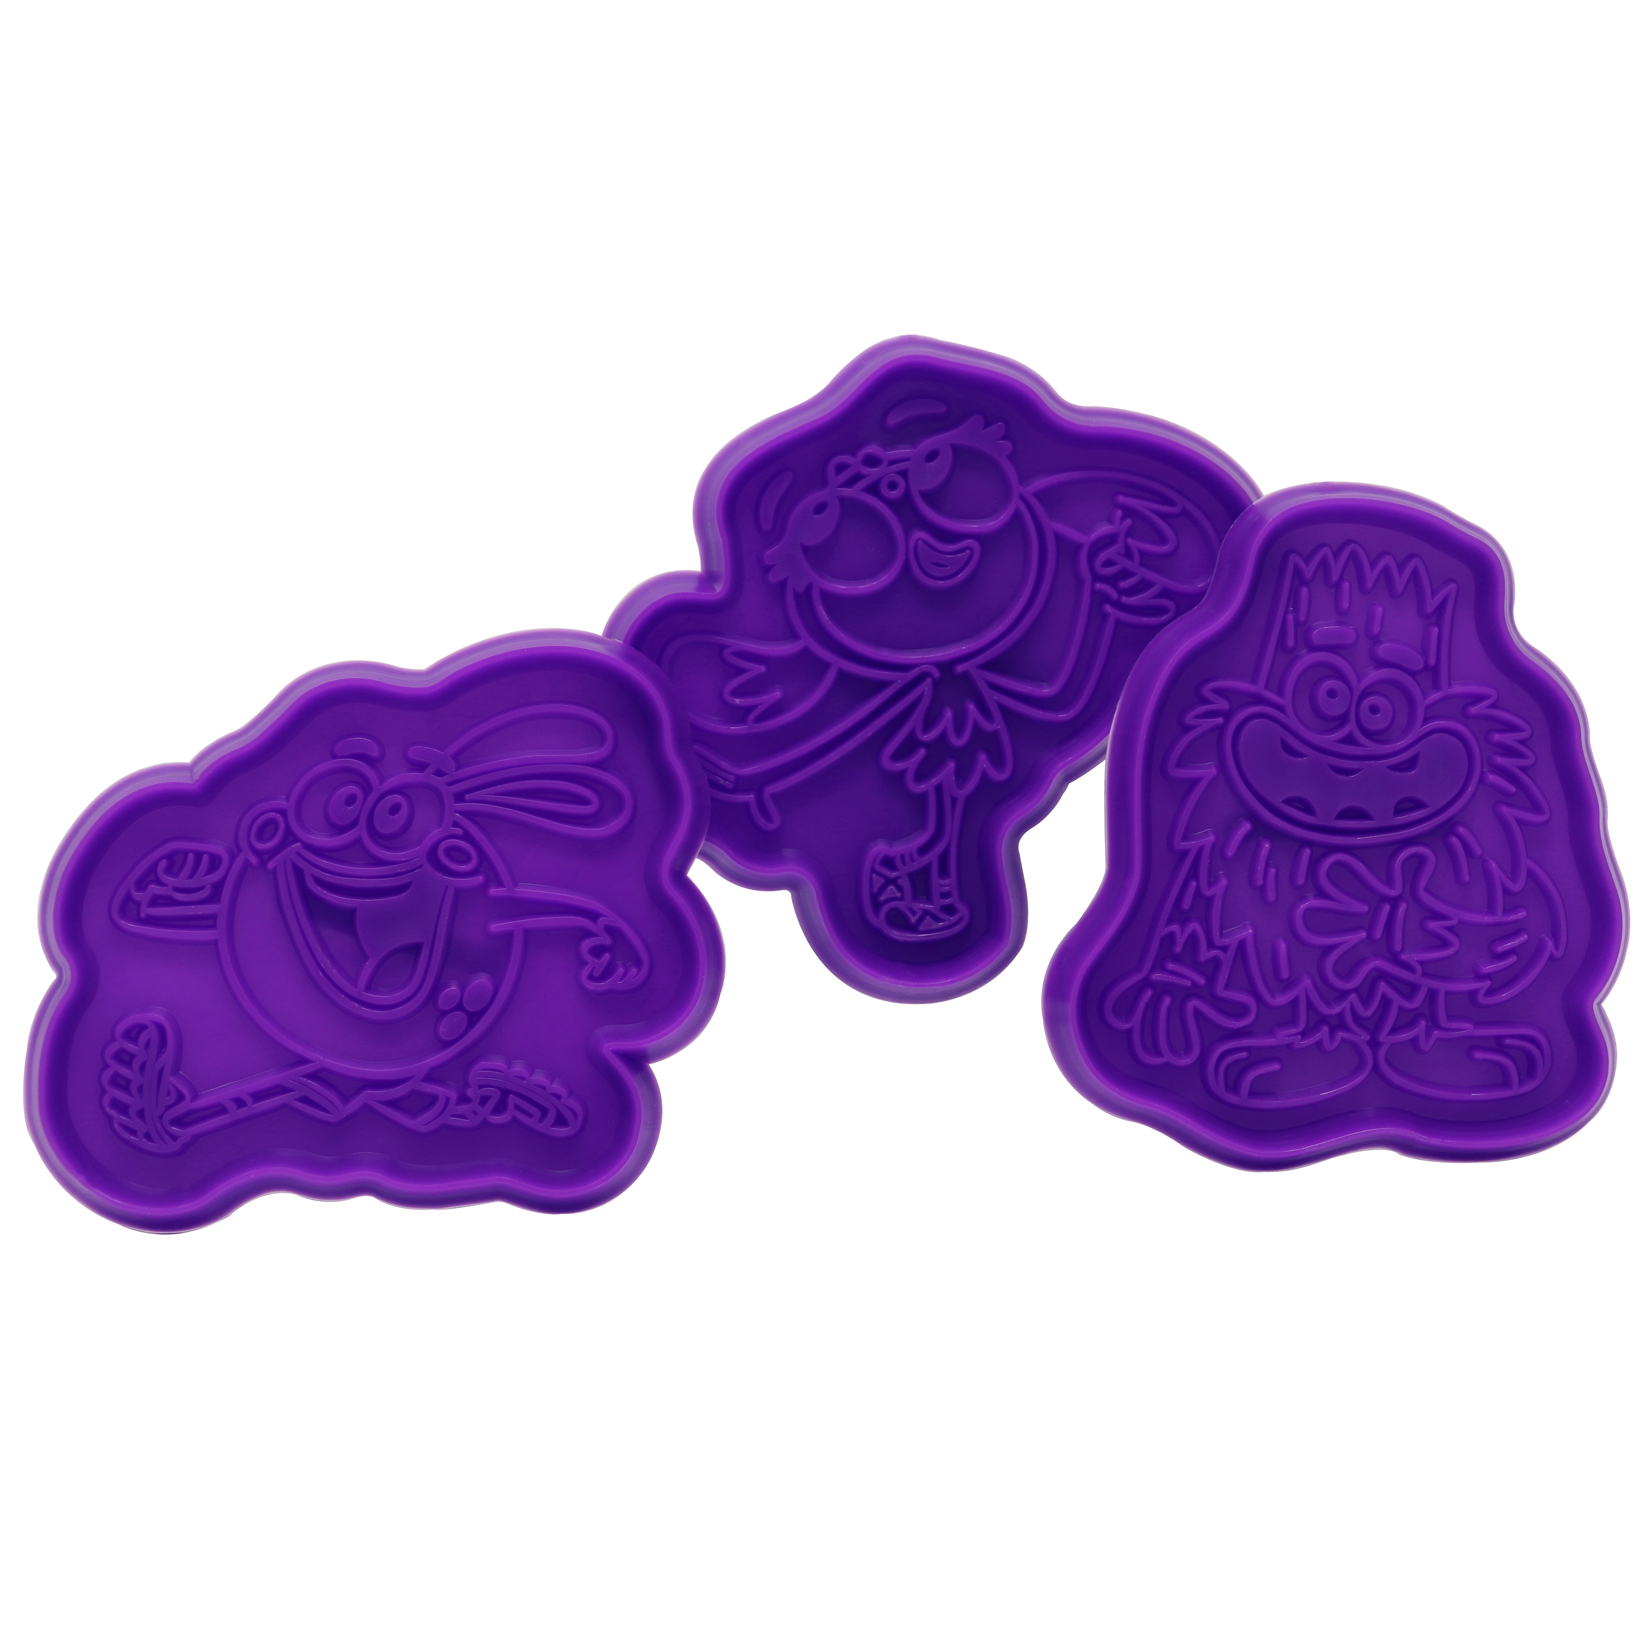 Purple fun characters Set of 3 cookie presses